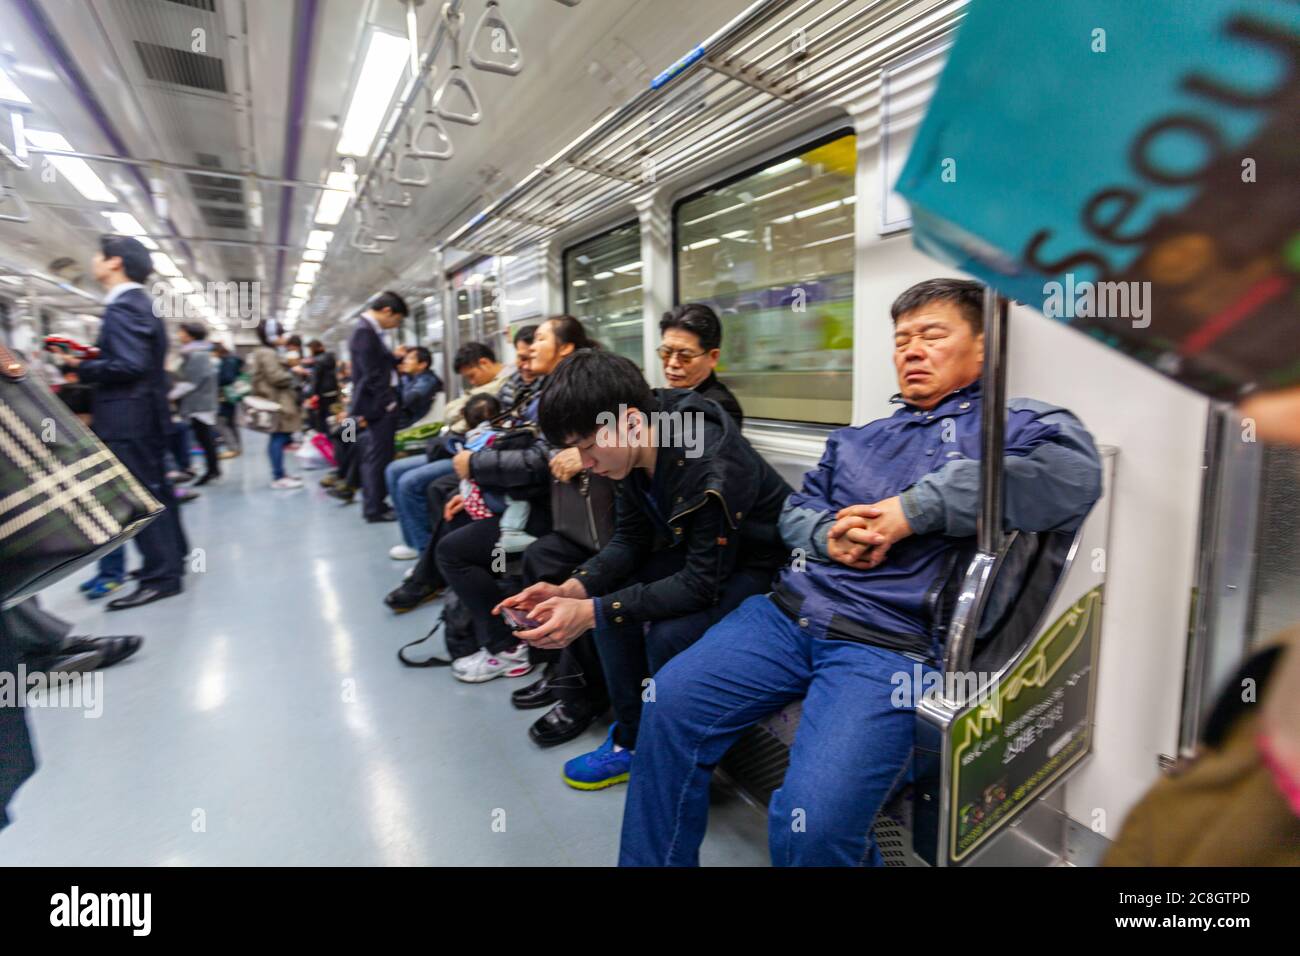 Soul guide book and man sleeping in wagon, Seoul Metropolitan Subway, Seoul, South Korea Stock Photo